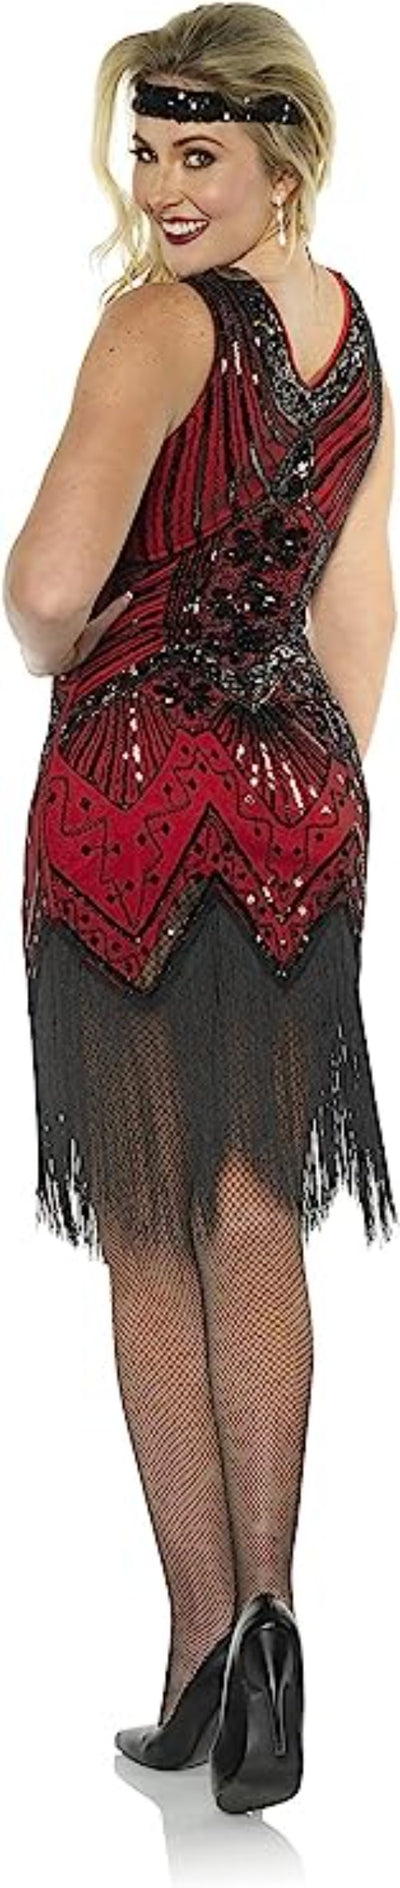 Scarlett- Adult Flapper Dress Women's 1920's Beaded Flapper Costume